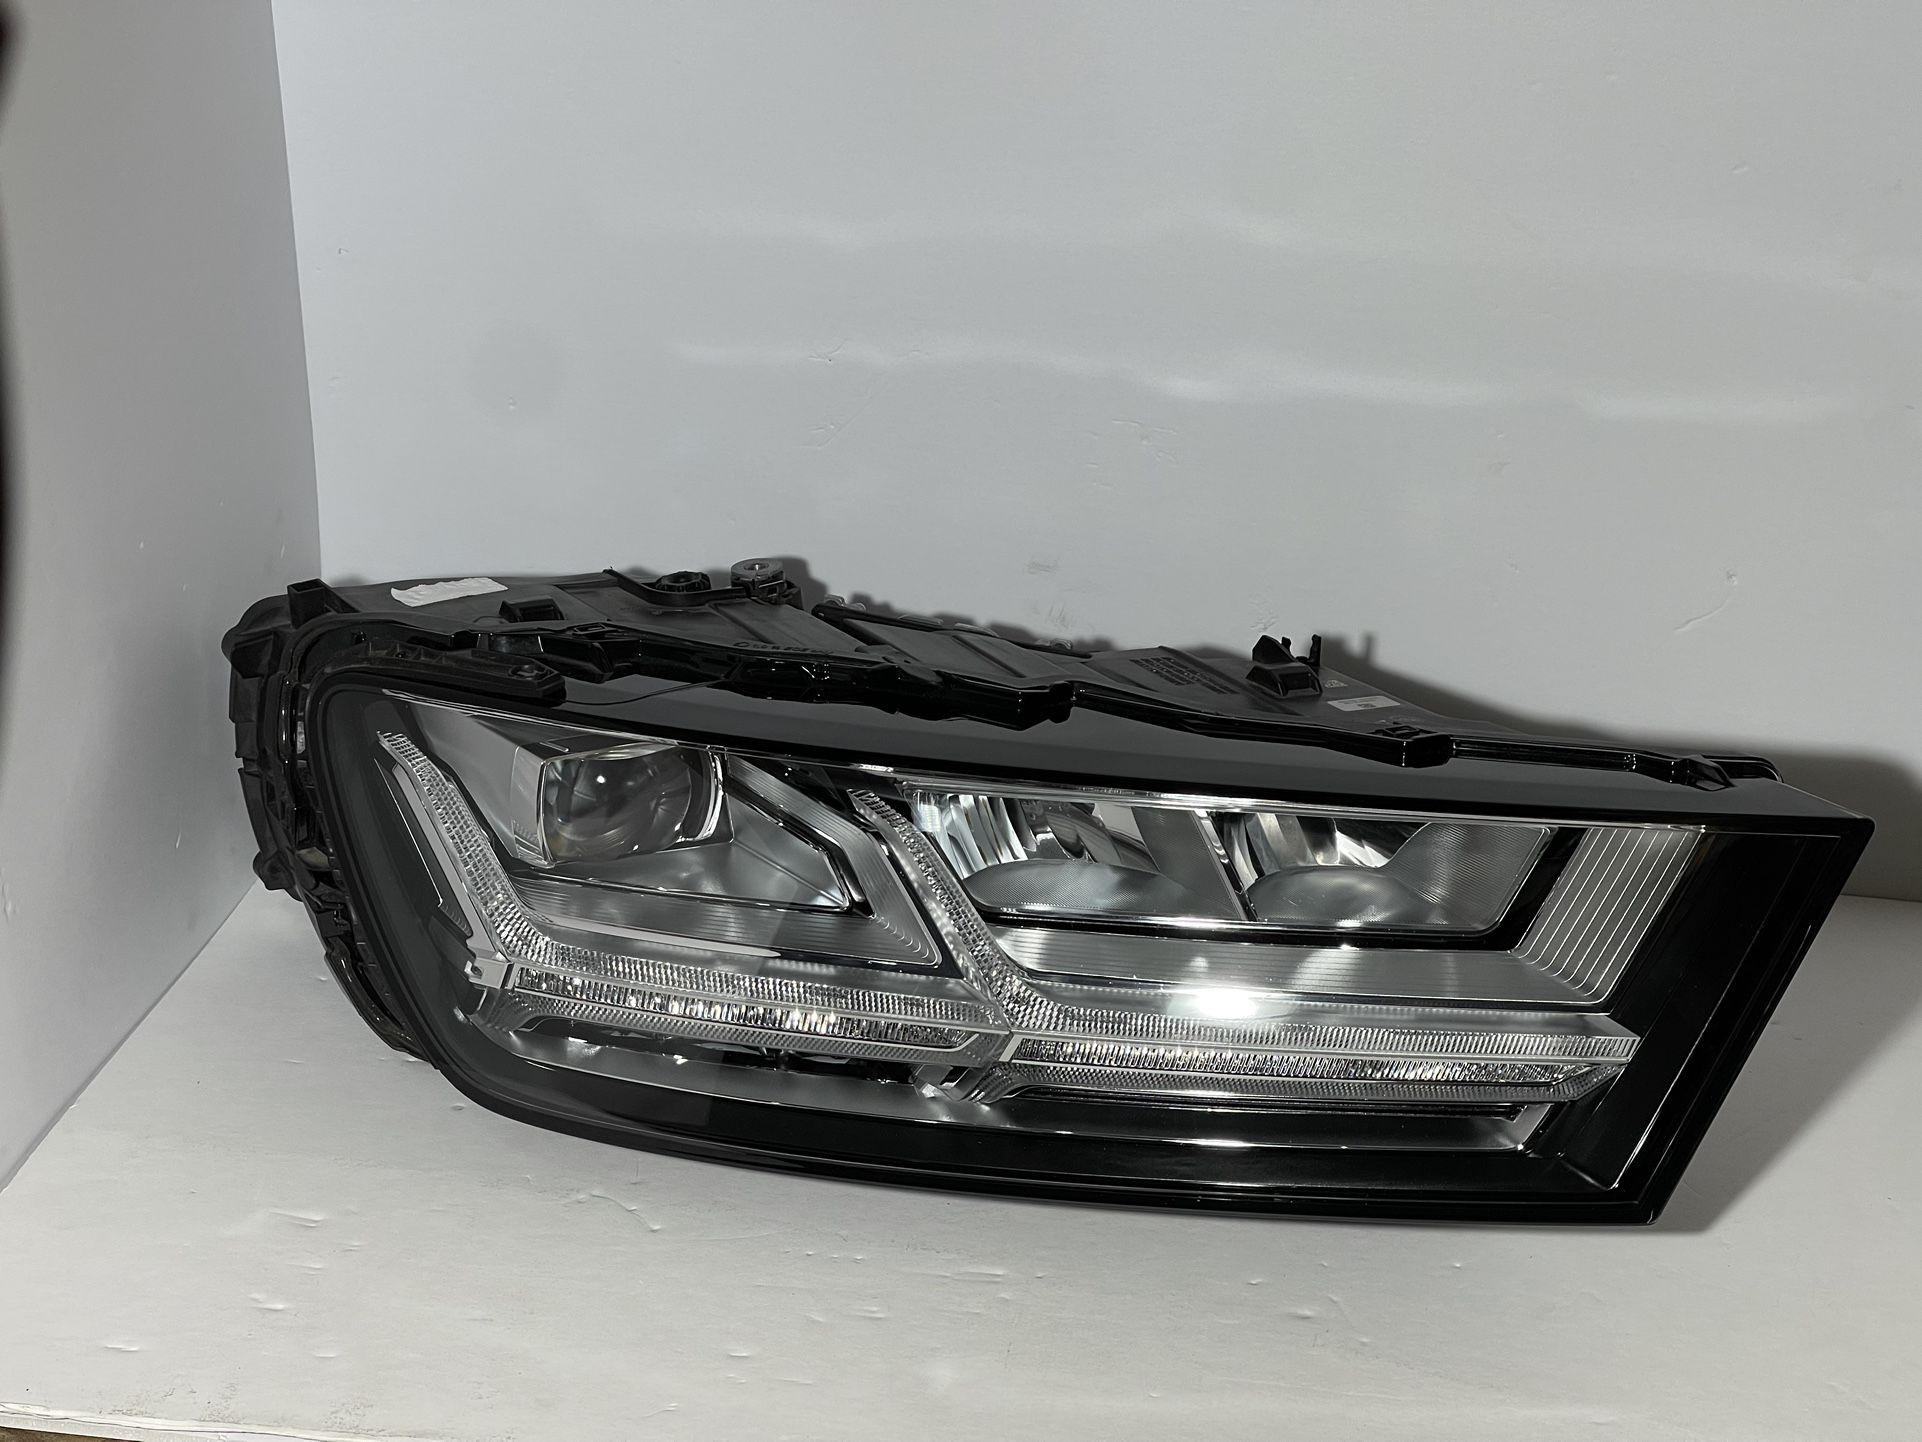 New 2017 2018 2019 Audi Q7 Headlight Oem Full Less